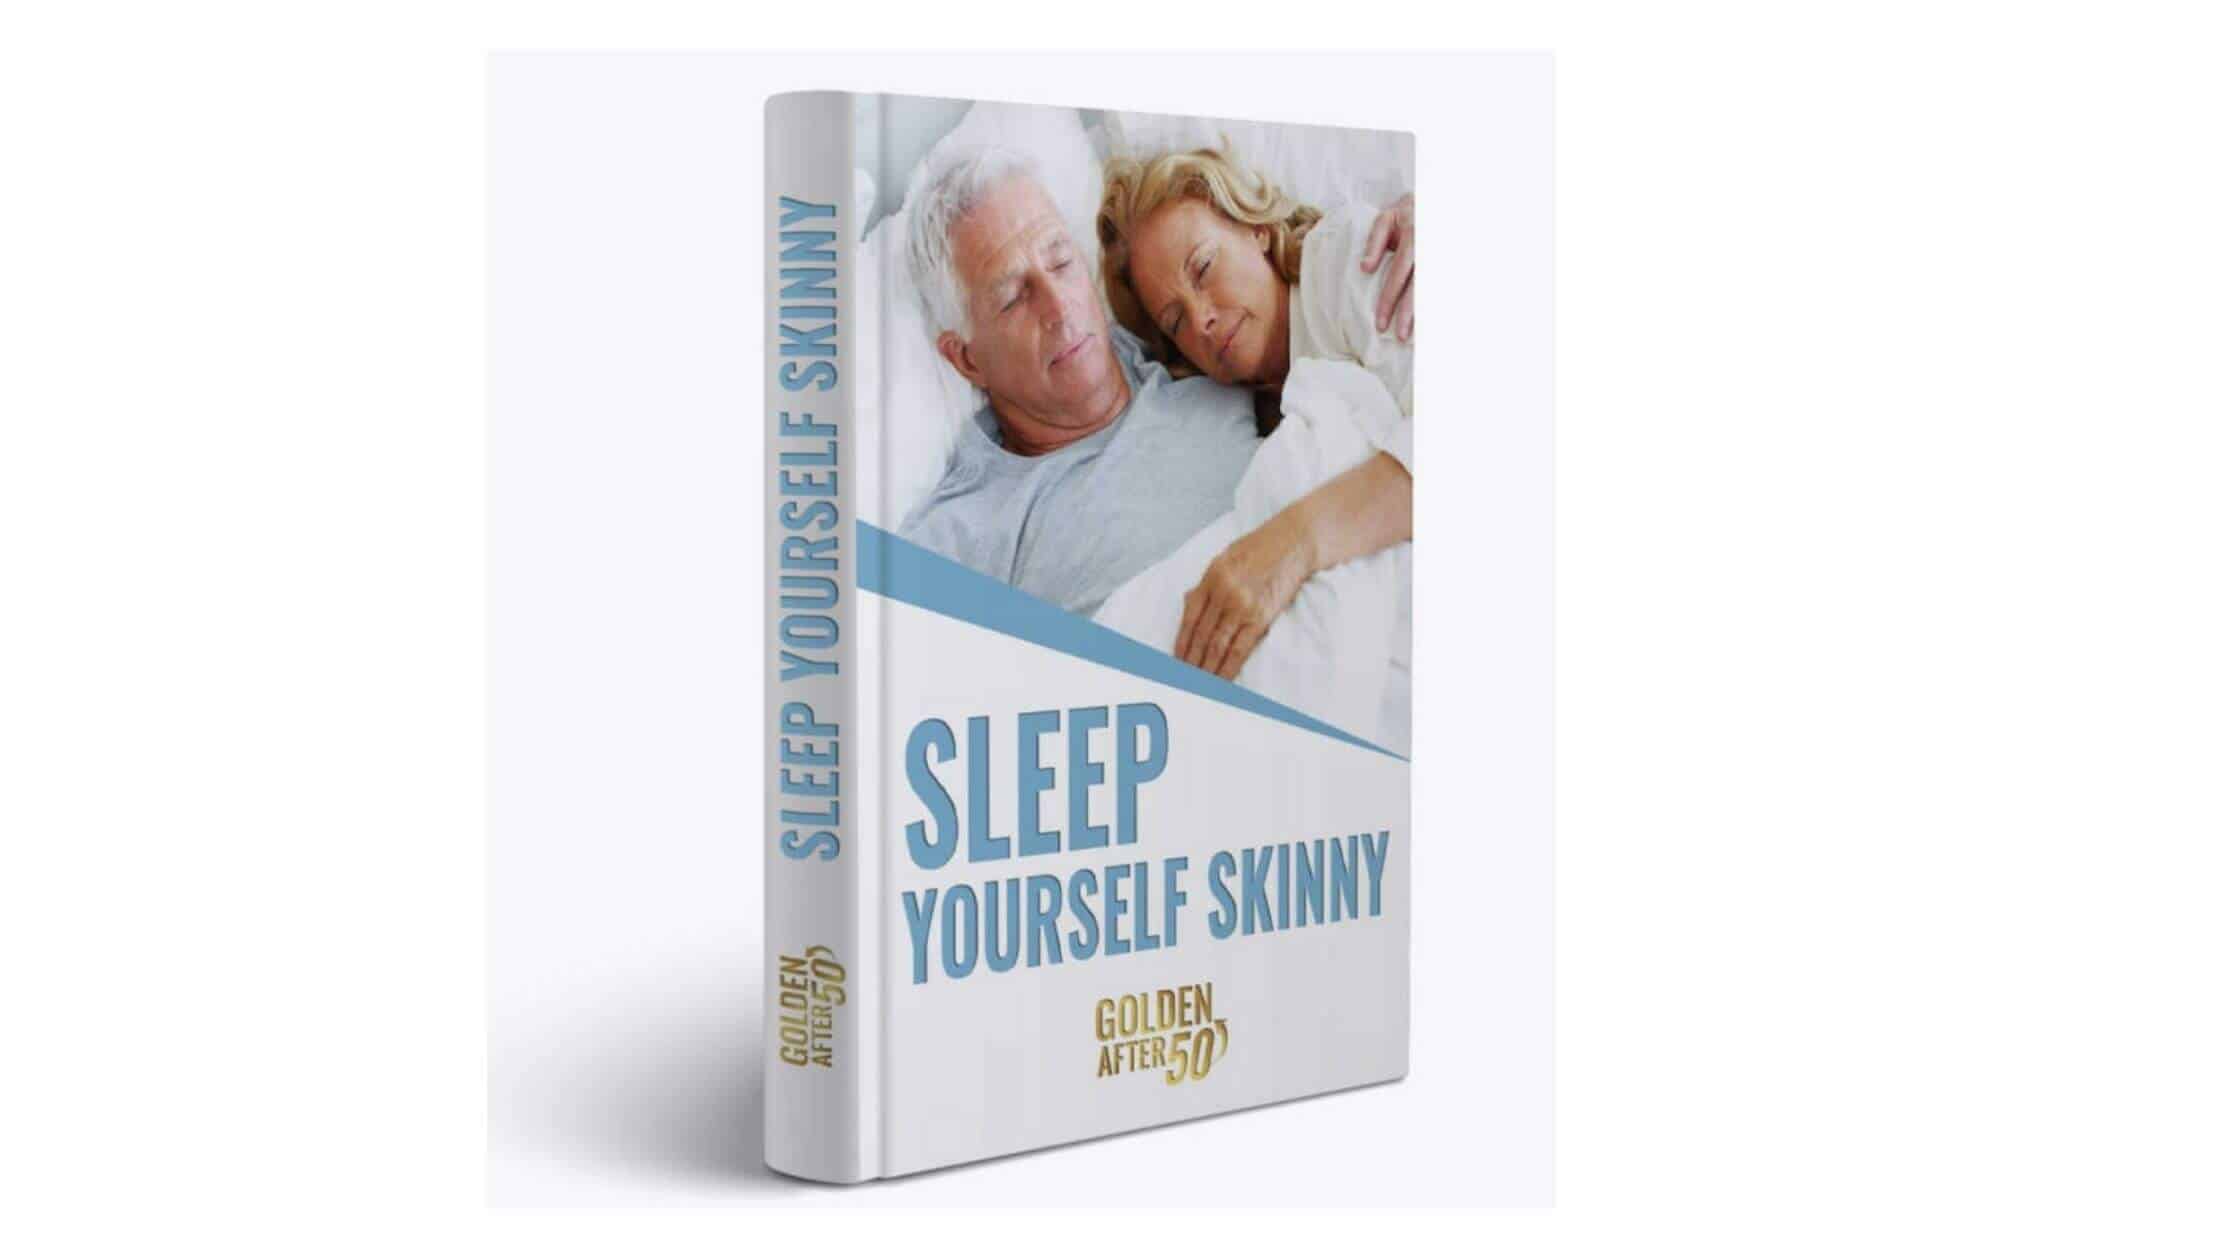 Sleep Yourself Skinny Reviews